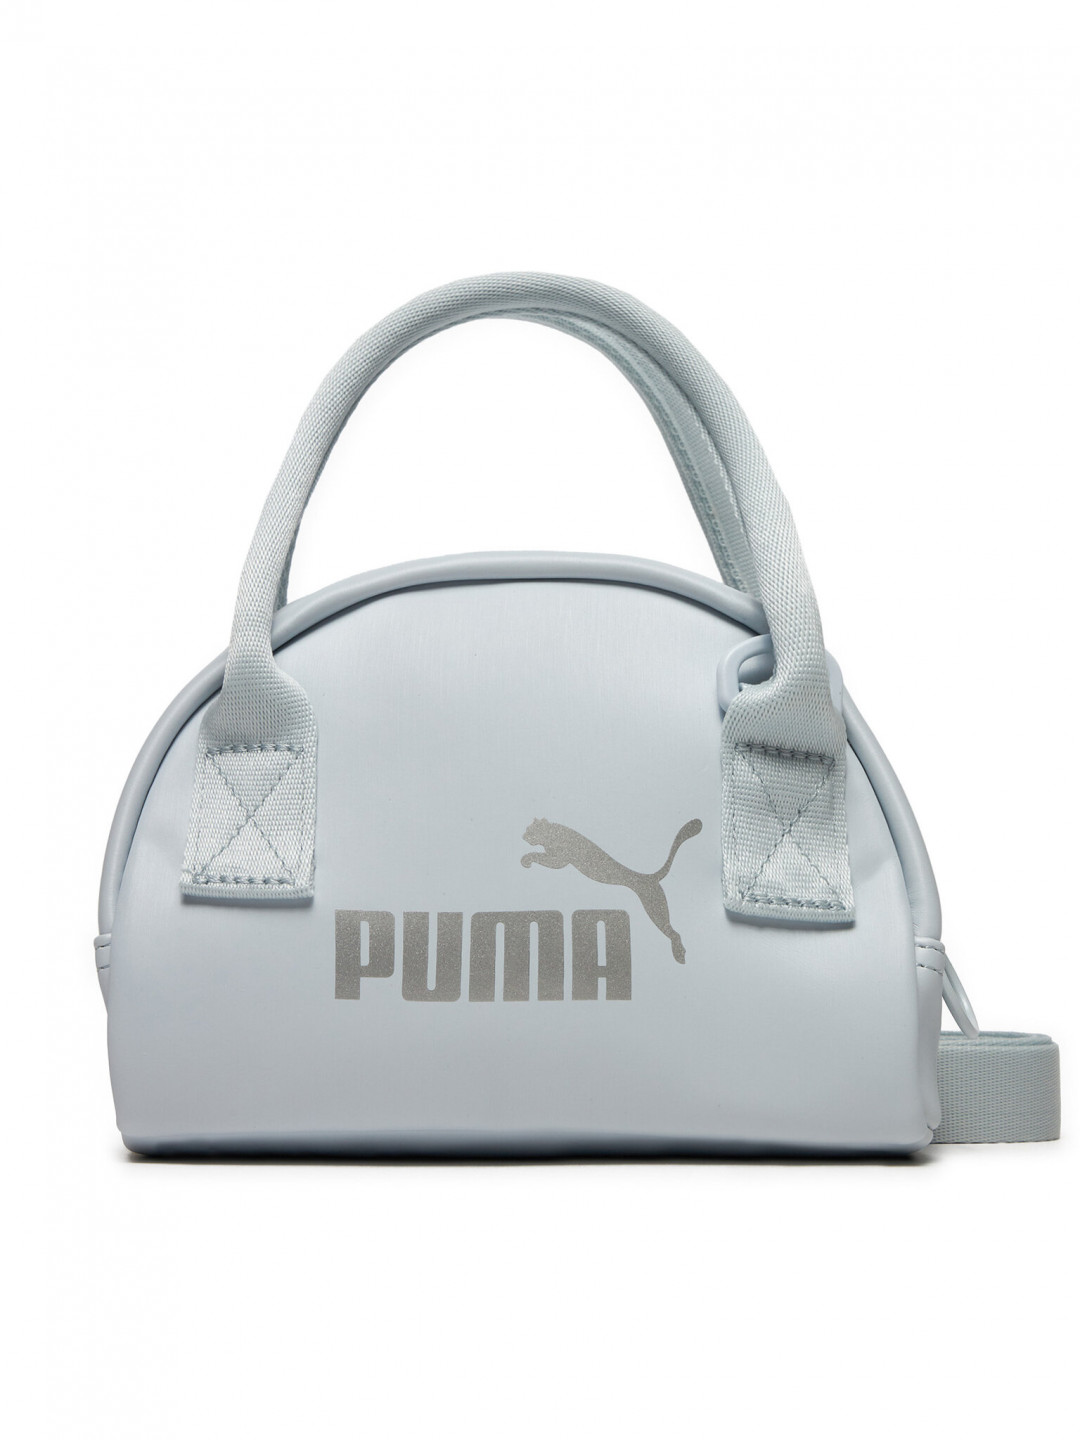 Puma Kabelka Core Up Mini Grip Bag 079479 02 Šedá